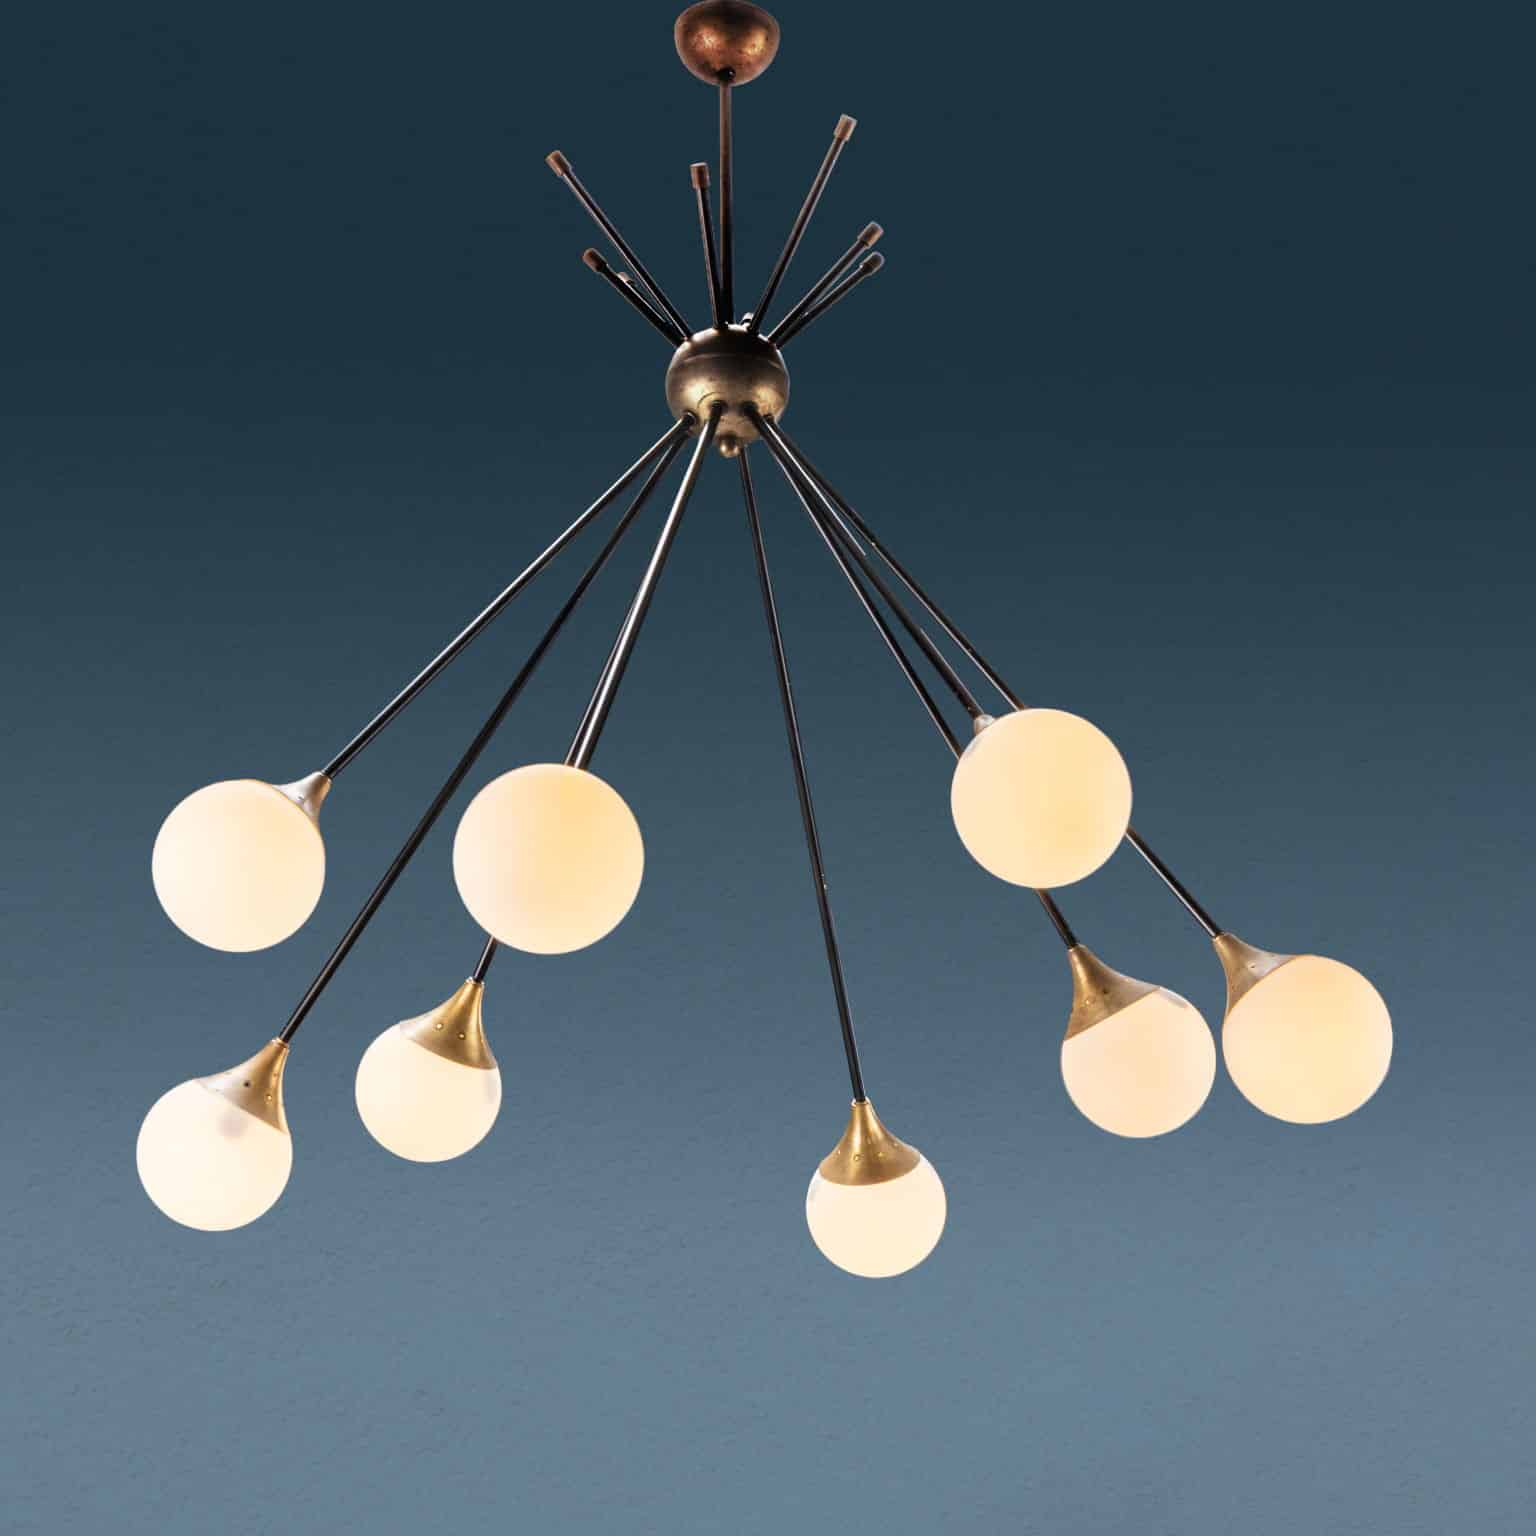 1950s-60s Lamp Italian Manufacture